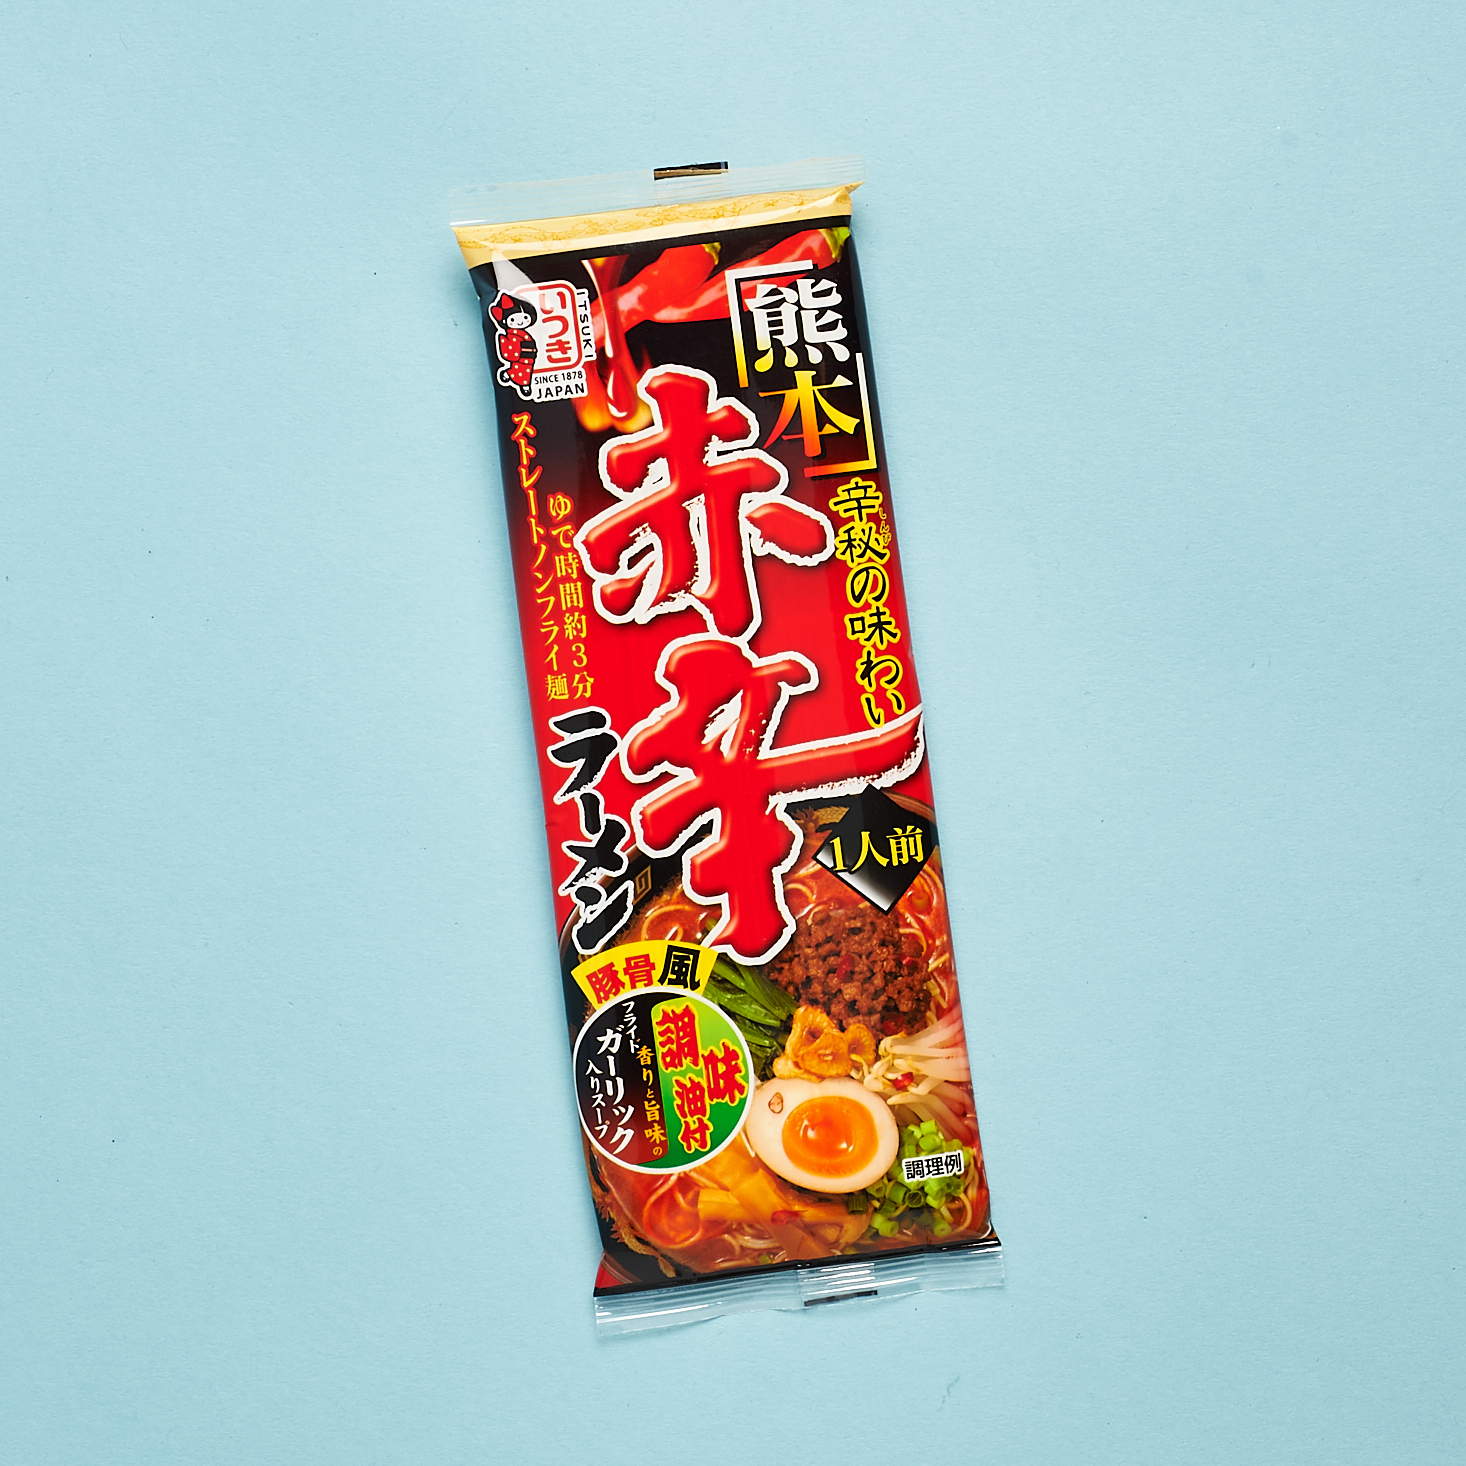 kumamoto spicy ramen package front